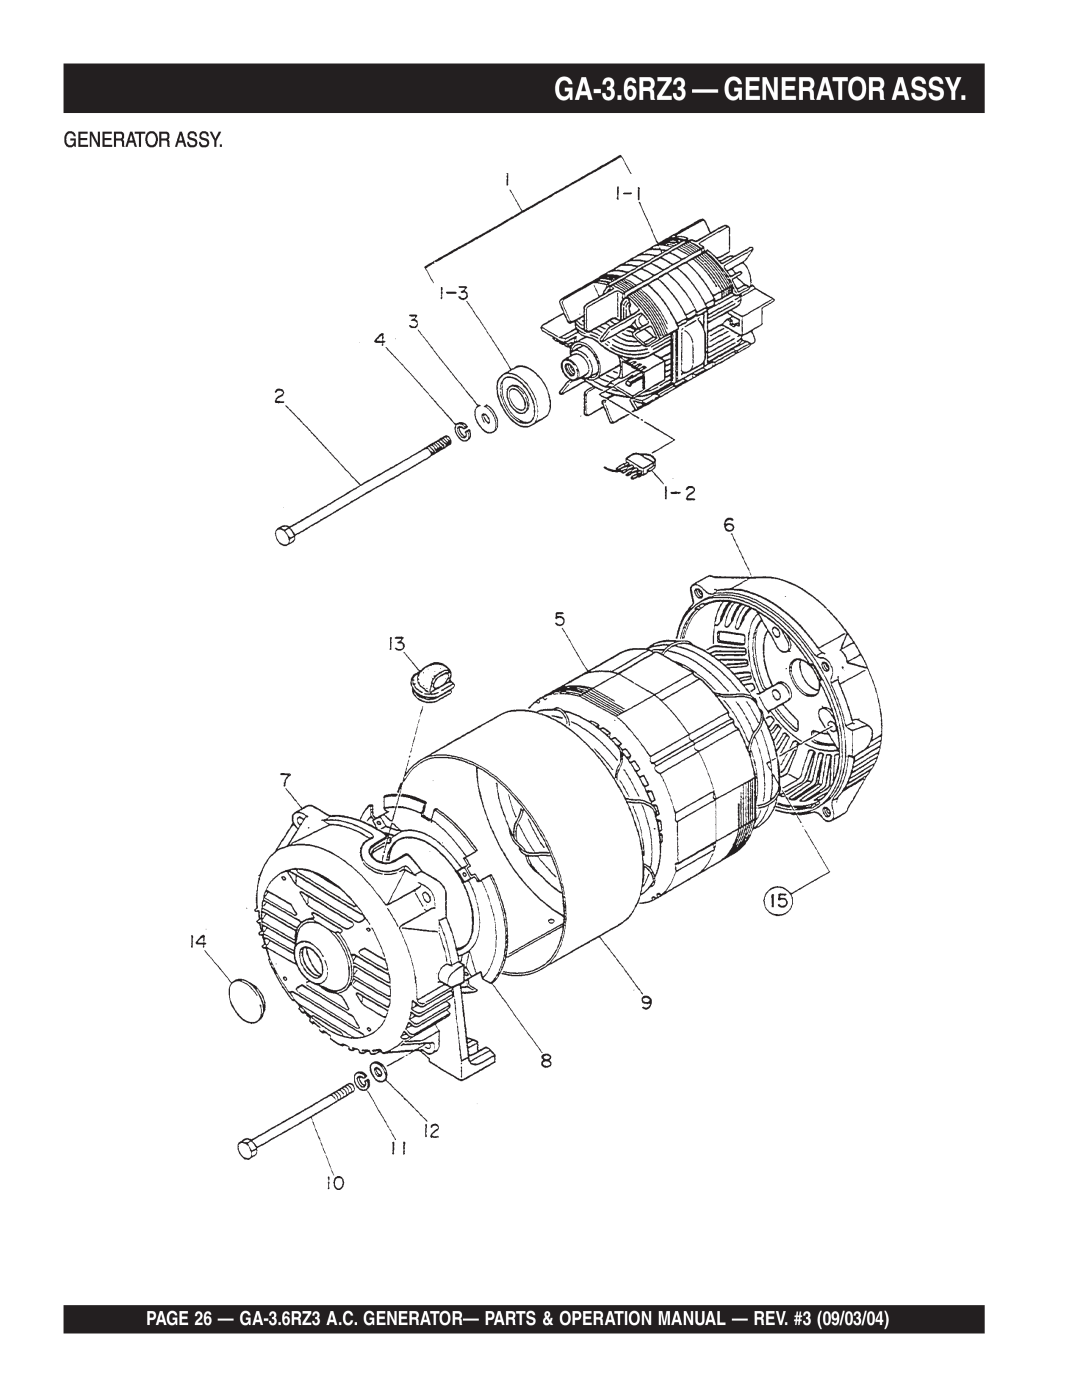 Multiquip operation manual GA-3.6RZ3— GENERATOR ASSY, Generator Assy 